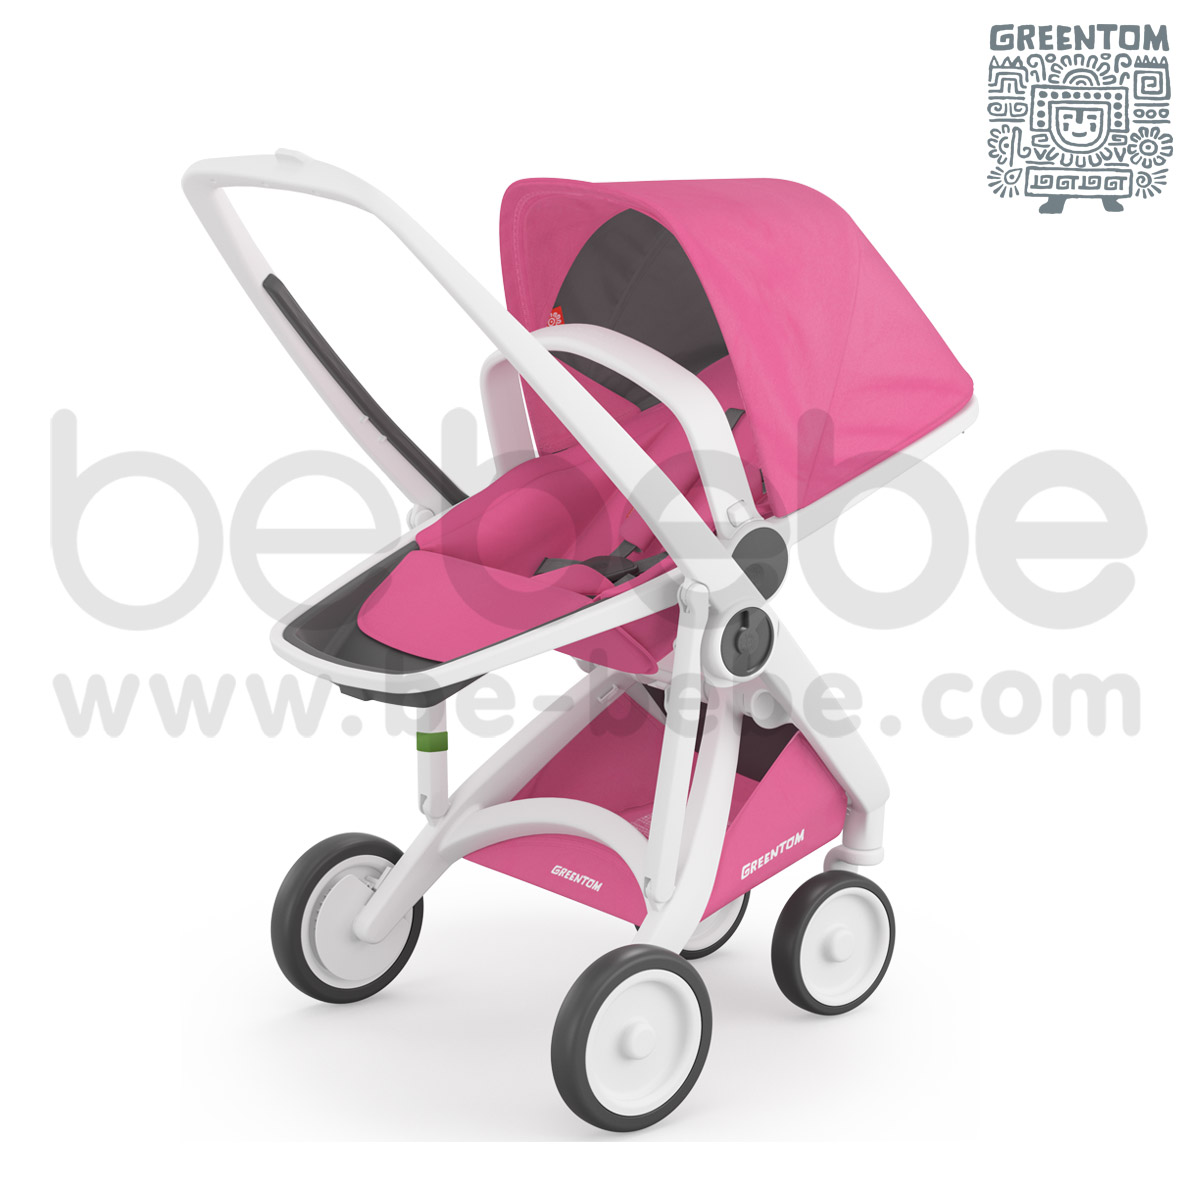 Greentom : Revesible White Frame Stroller - Pink